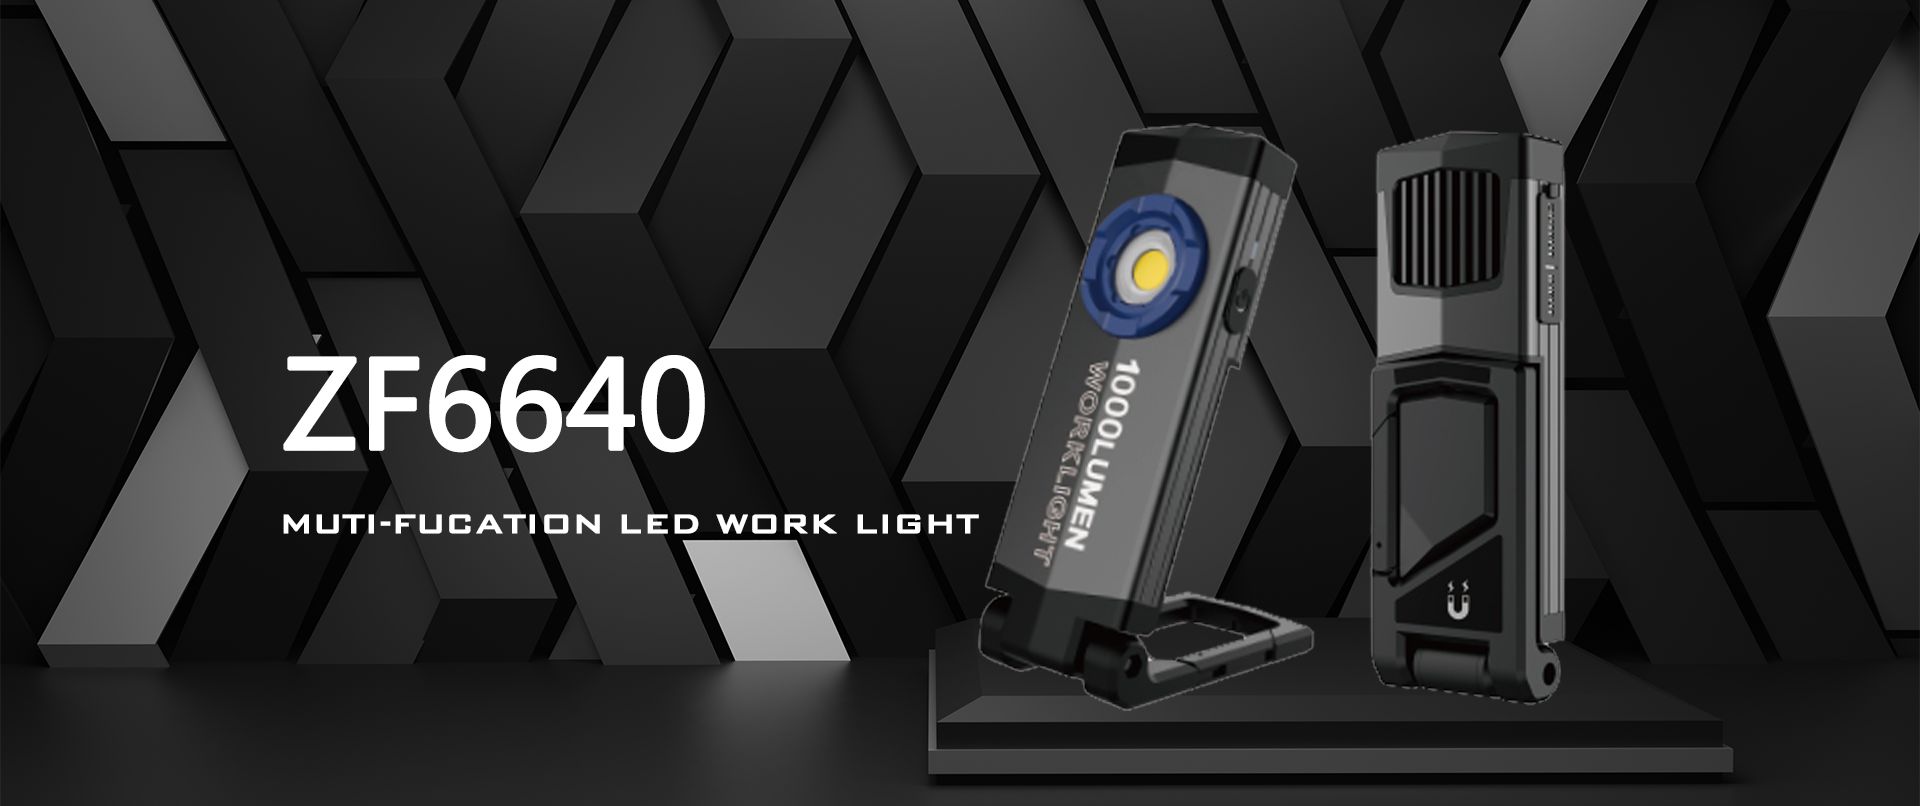 https://www.cnblight.com/folding-design-muti-funcional-led-flashlight-product/